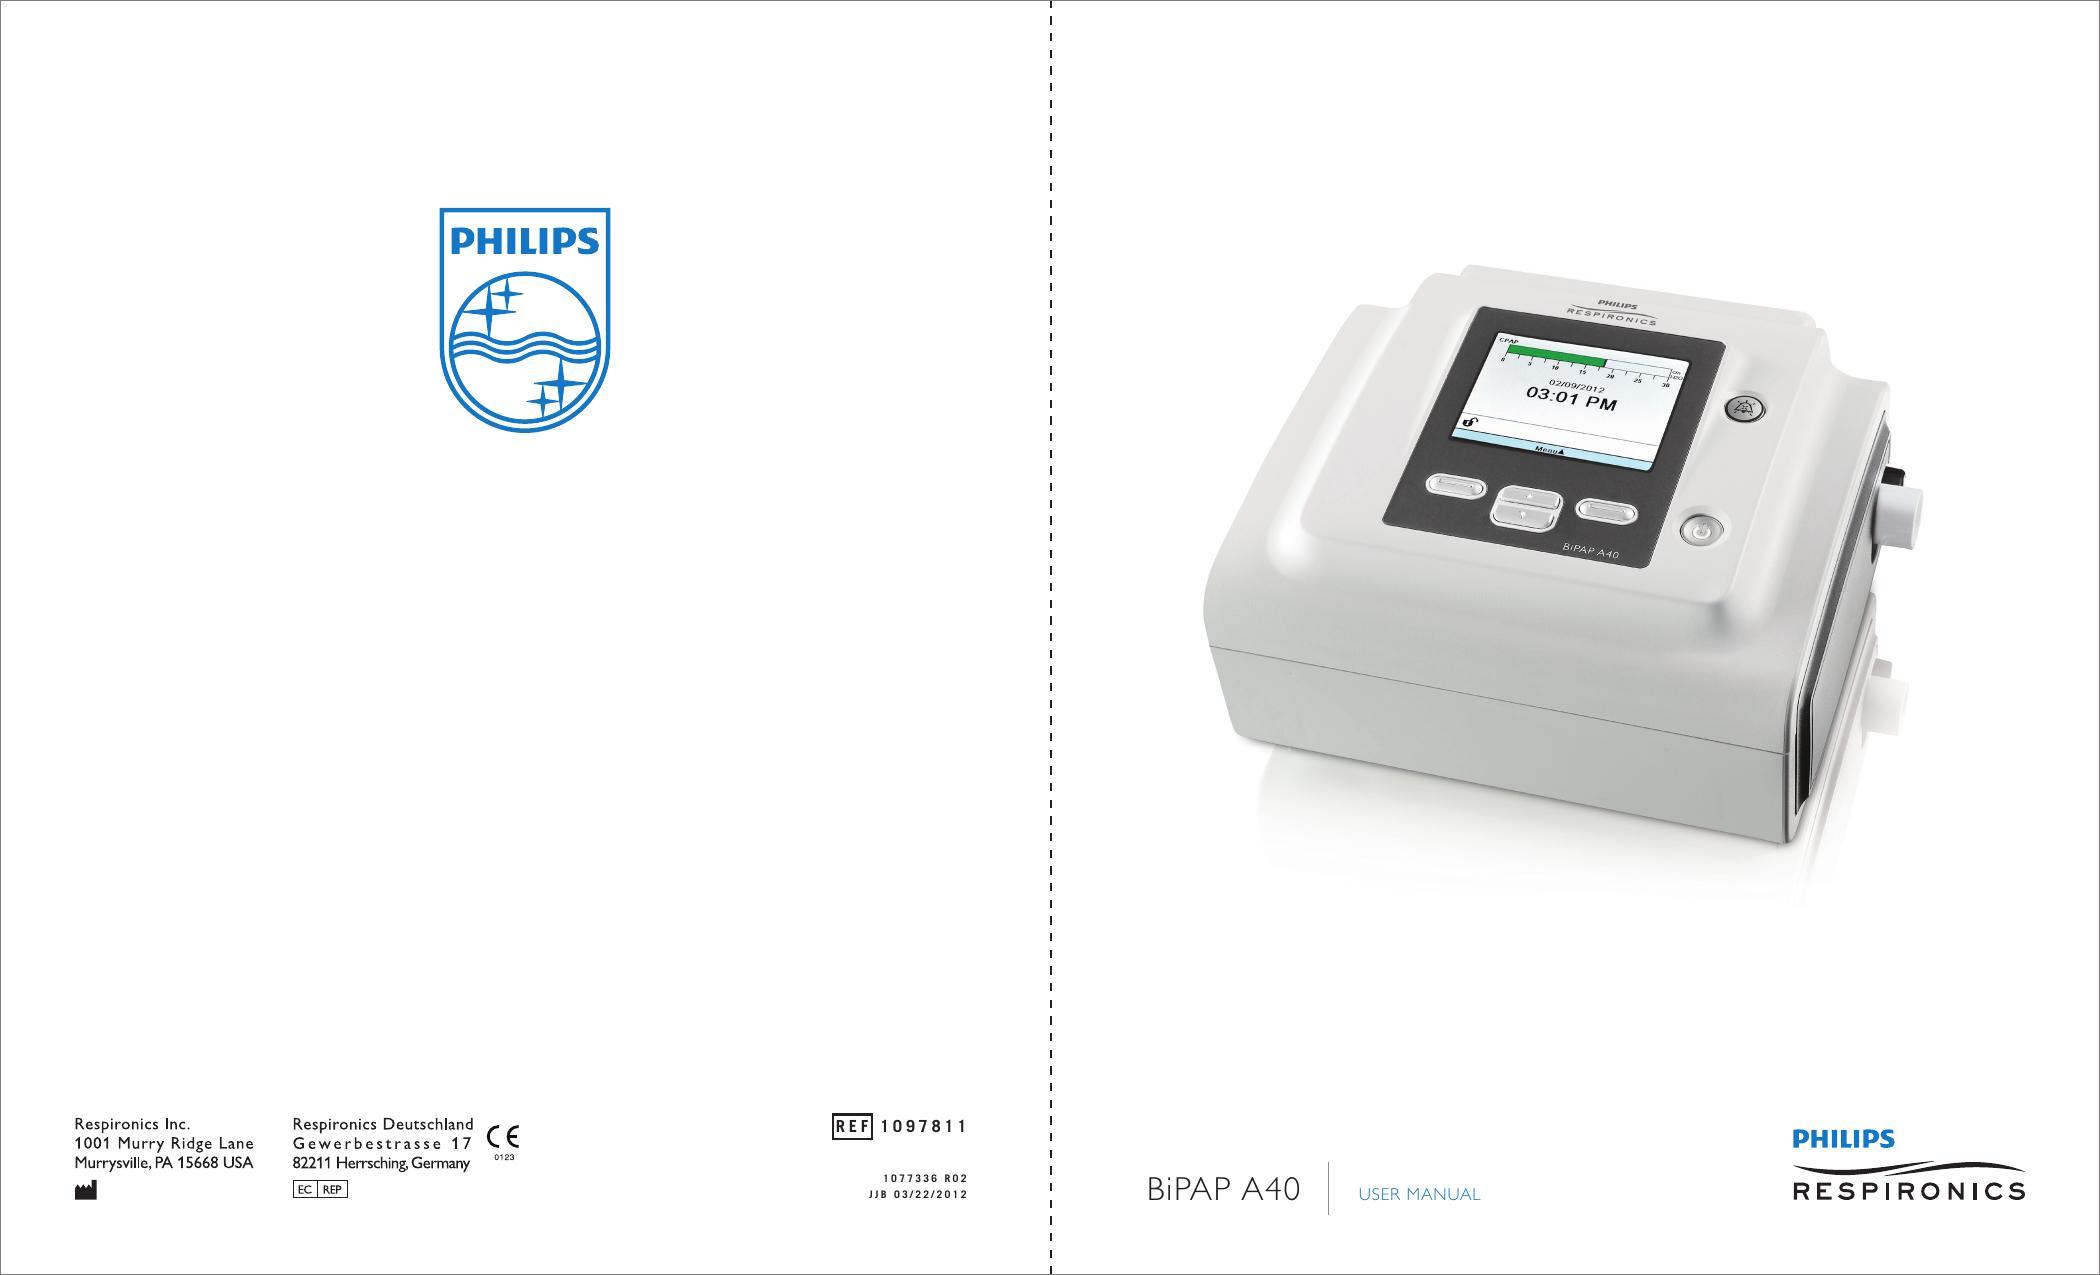 bipap-a40-user-manual.pdf